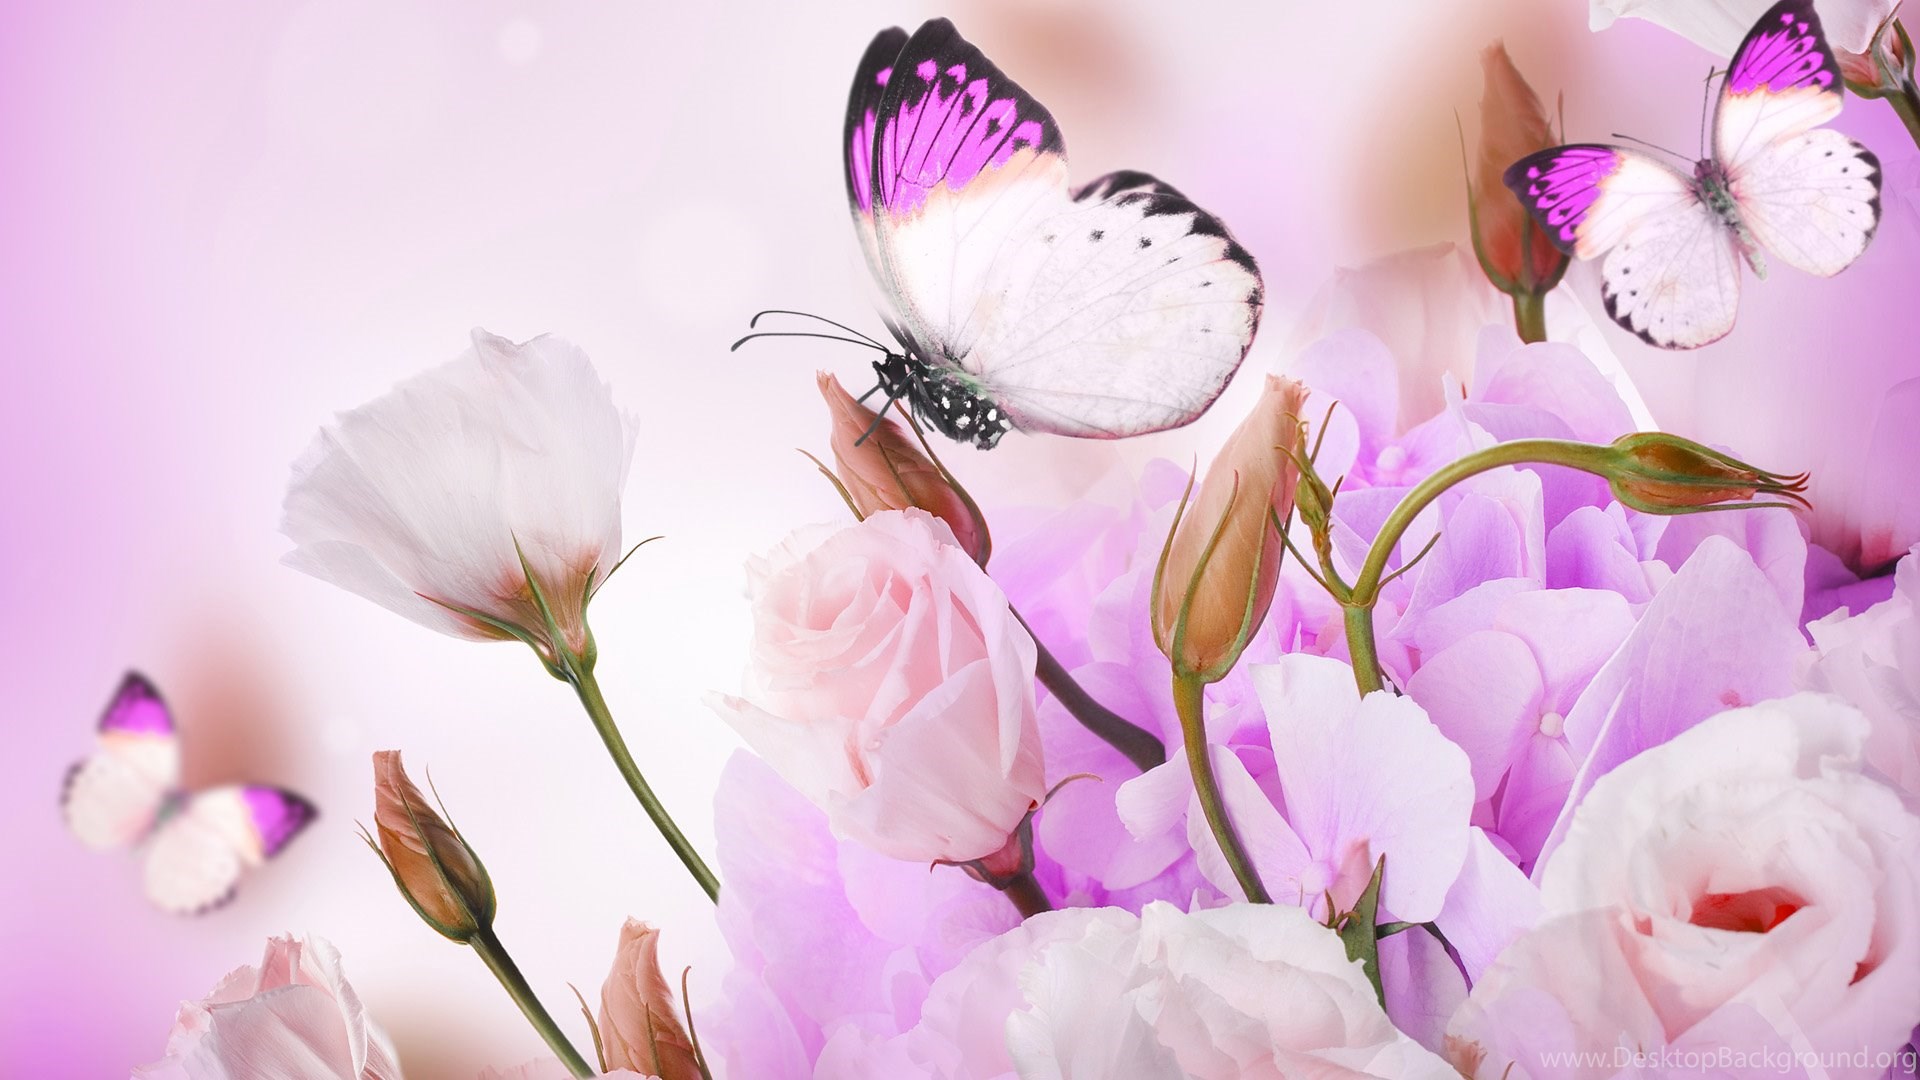 Pink Roses And Butterfly Art Wallpaper, Rose Flower Image, Rose. Desktop Background